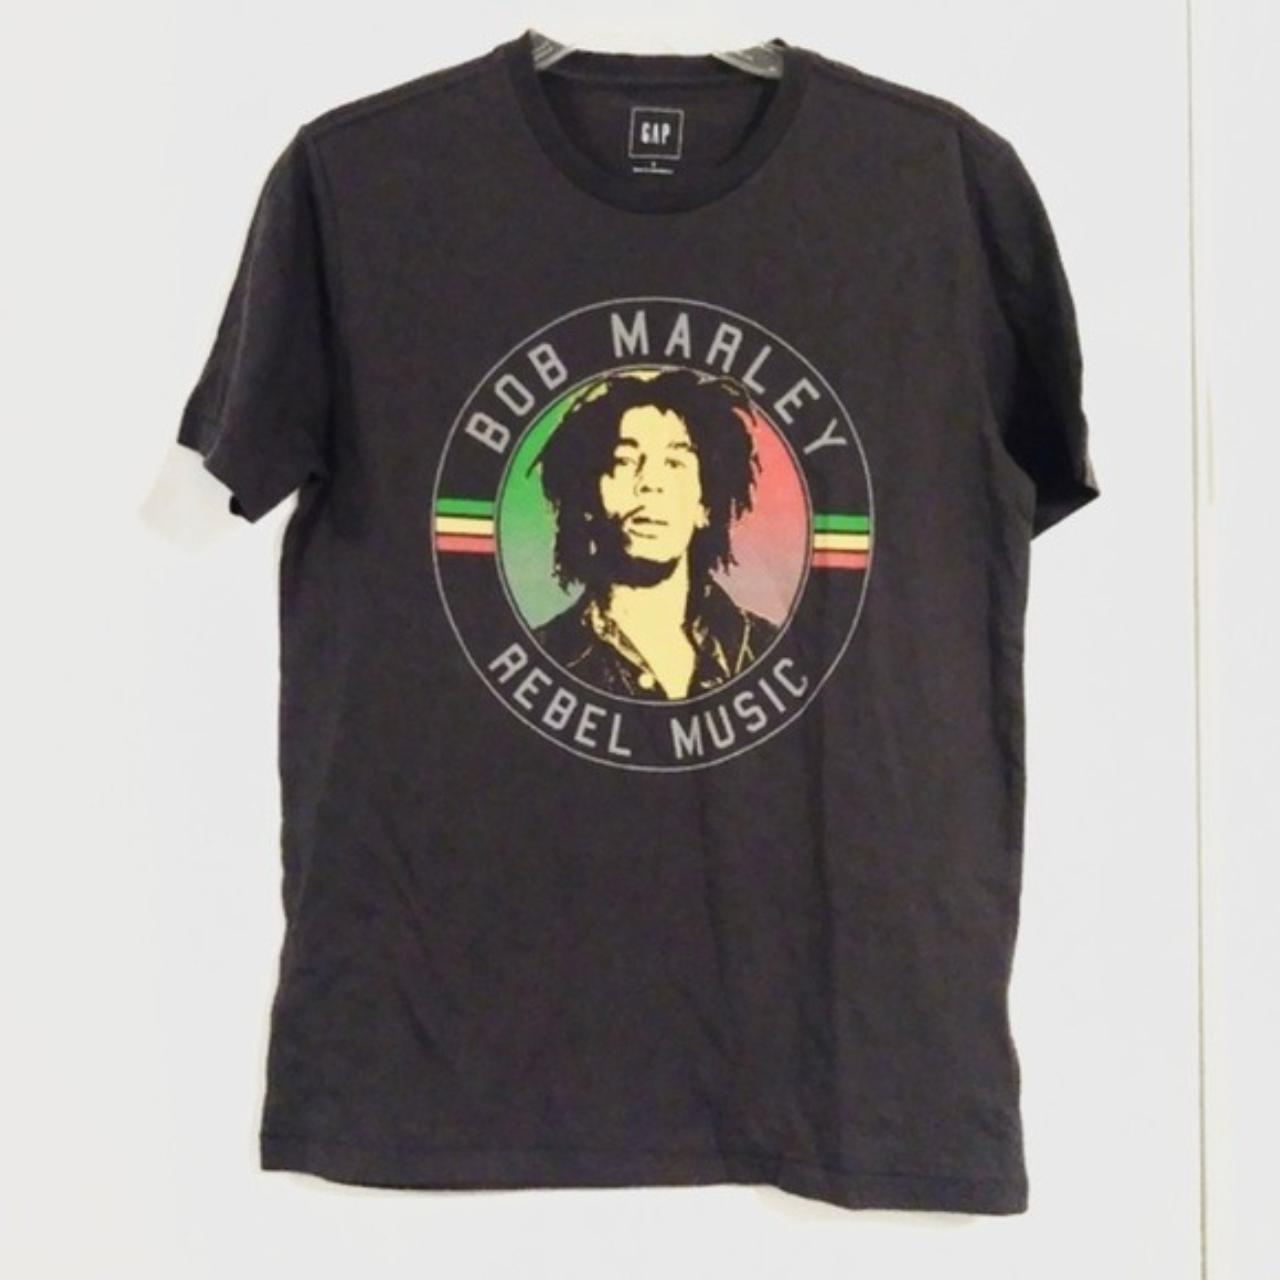 Gap Men's Bob Marley Rebel Music Grey TShirt New... - Depop